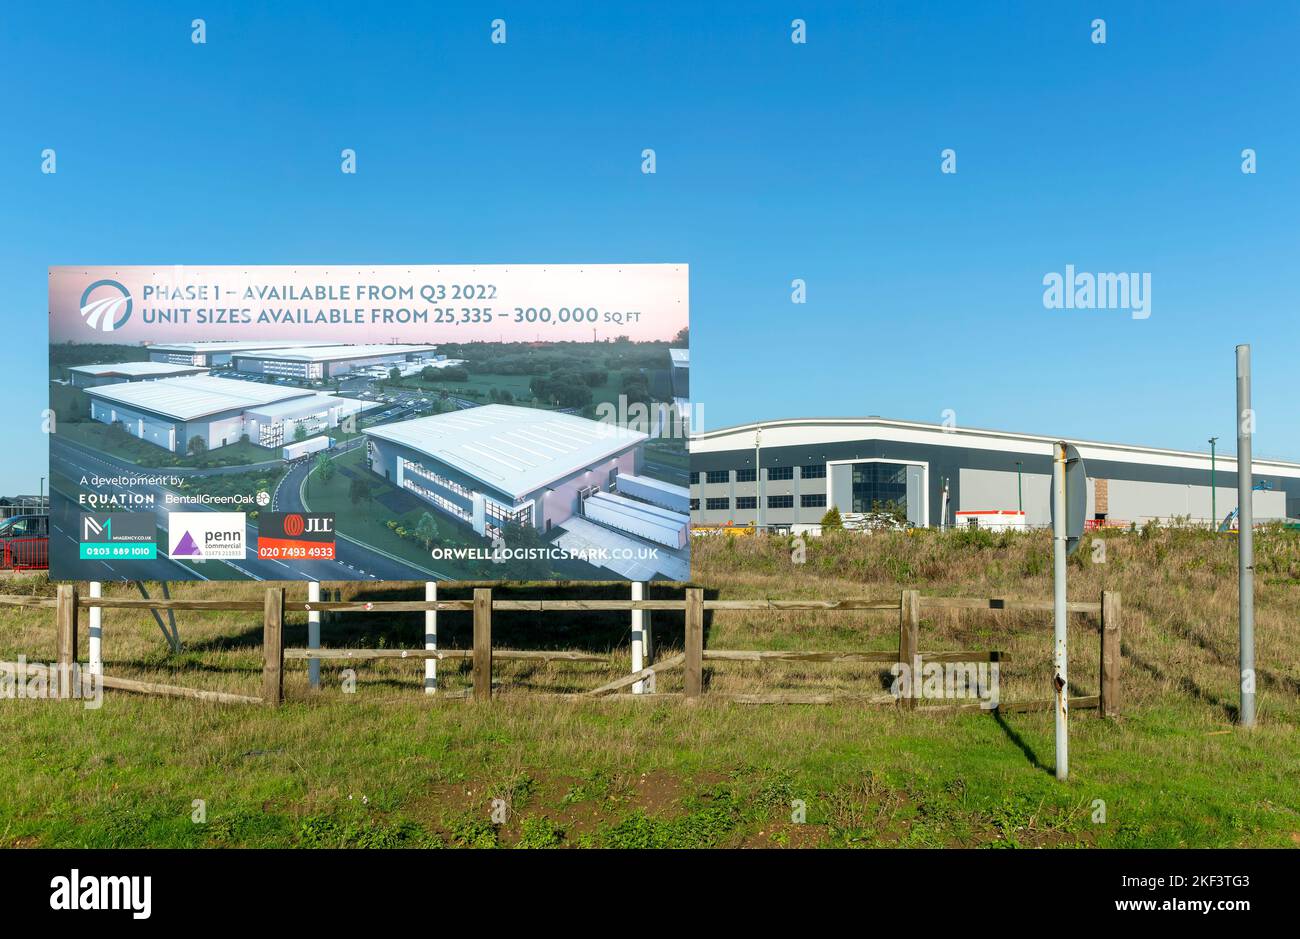 Estate agent billboard advertising sign commercial property development, Orwell Logistics park  Ipswich, Suffolk, England, UK Stock Photo